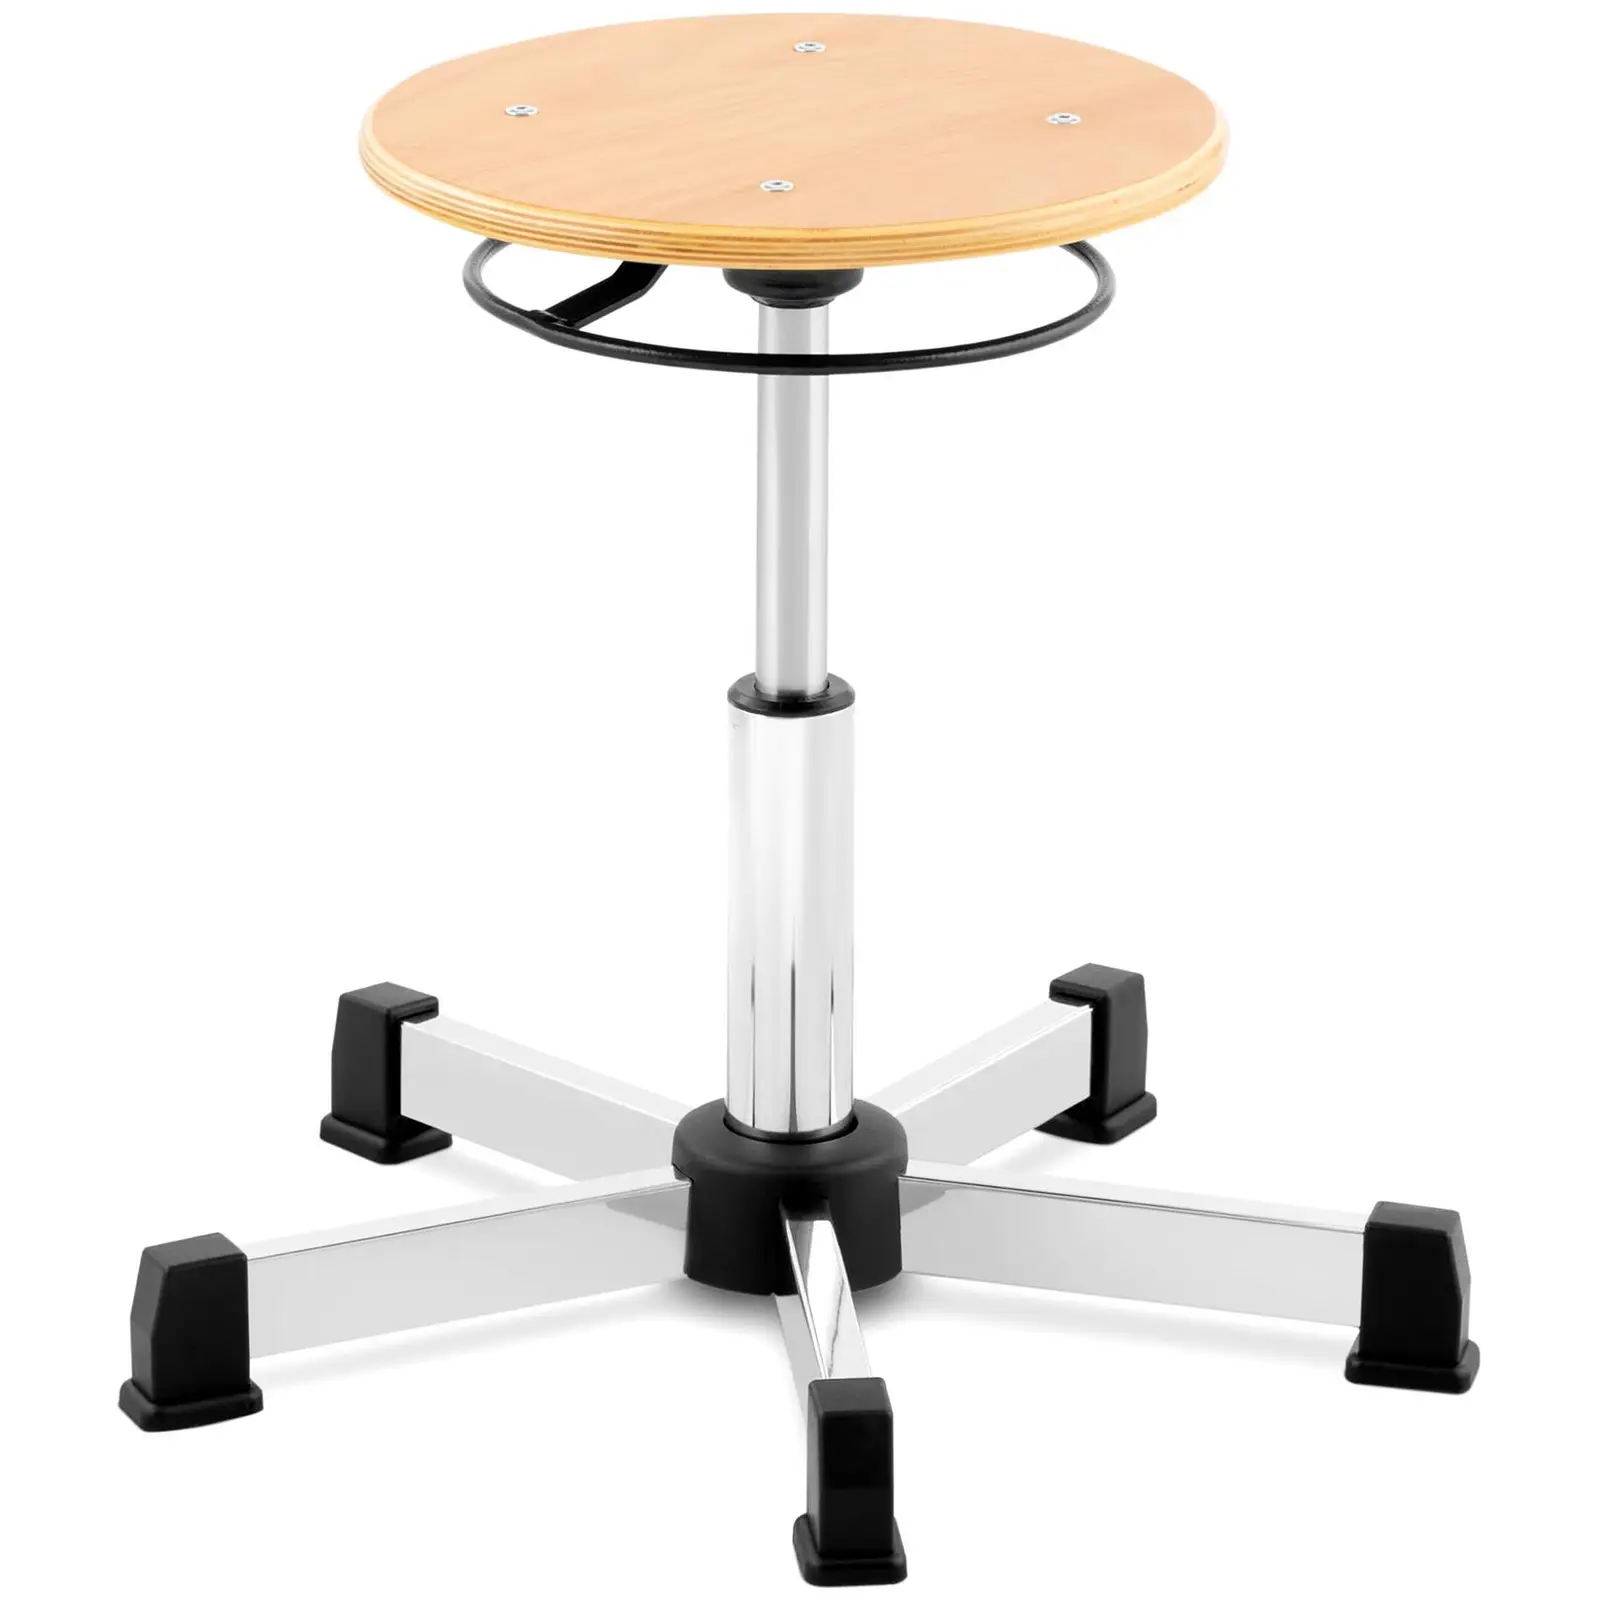 Workshop stool - 120 kg - Natural wood - height adjustable from 350 - 485 mm